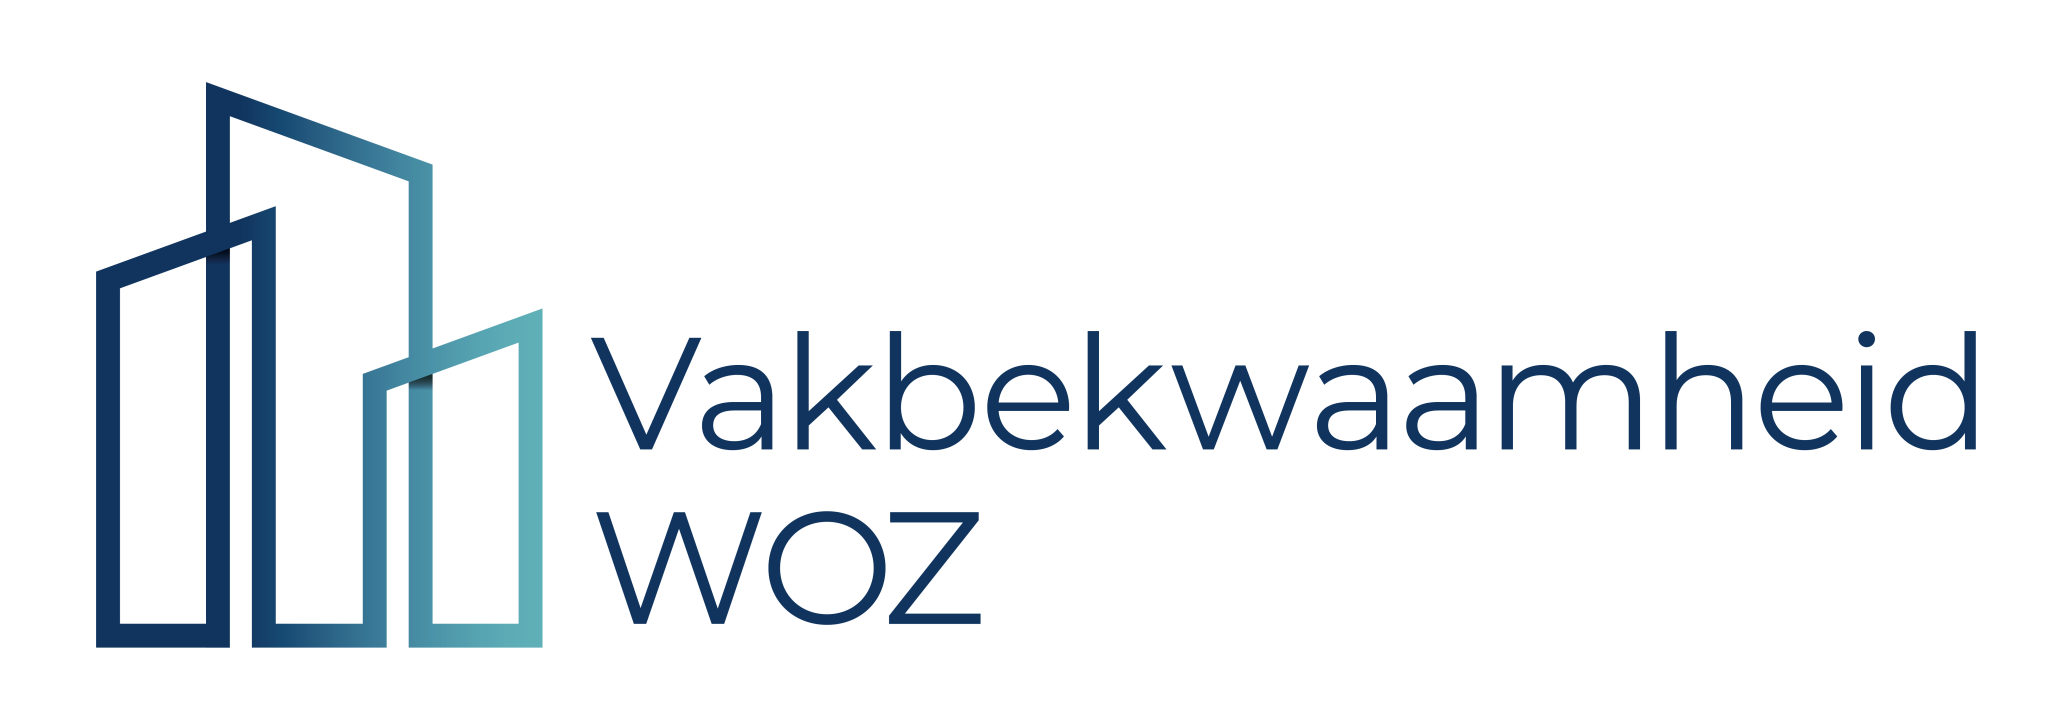 Logo vakbekwaamheid WOZ